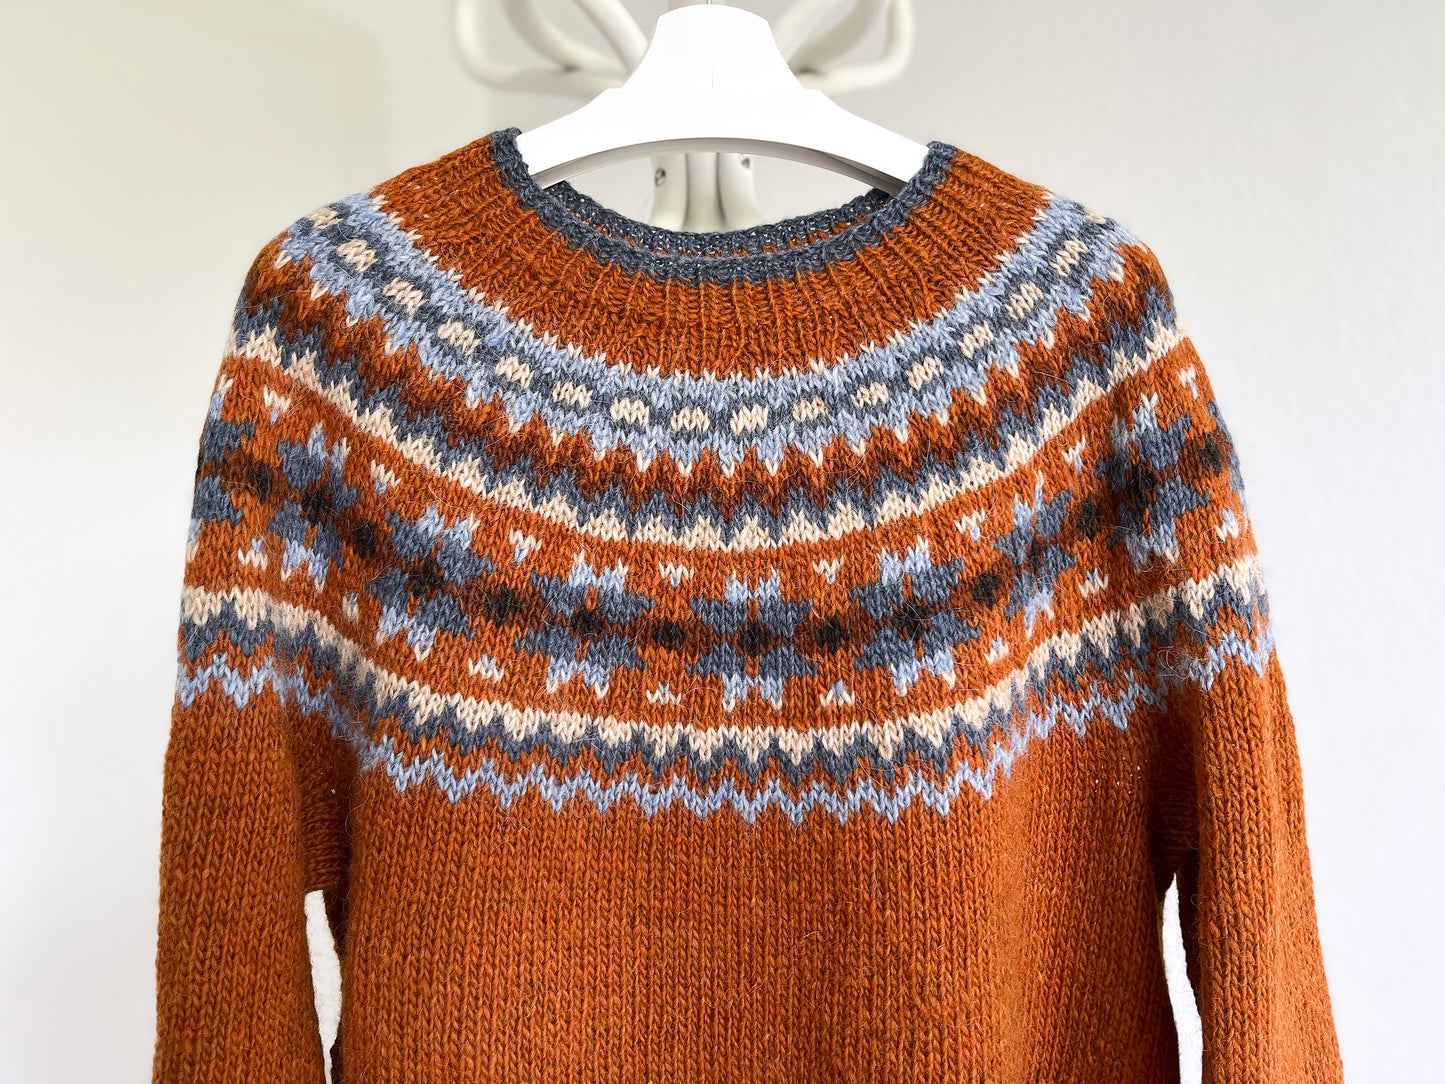 Yoke of Orange and blue Icelandic lopapeysa knitted sweater from Lettlopi pure Icelandic wool in Rósir design